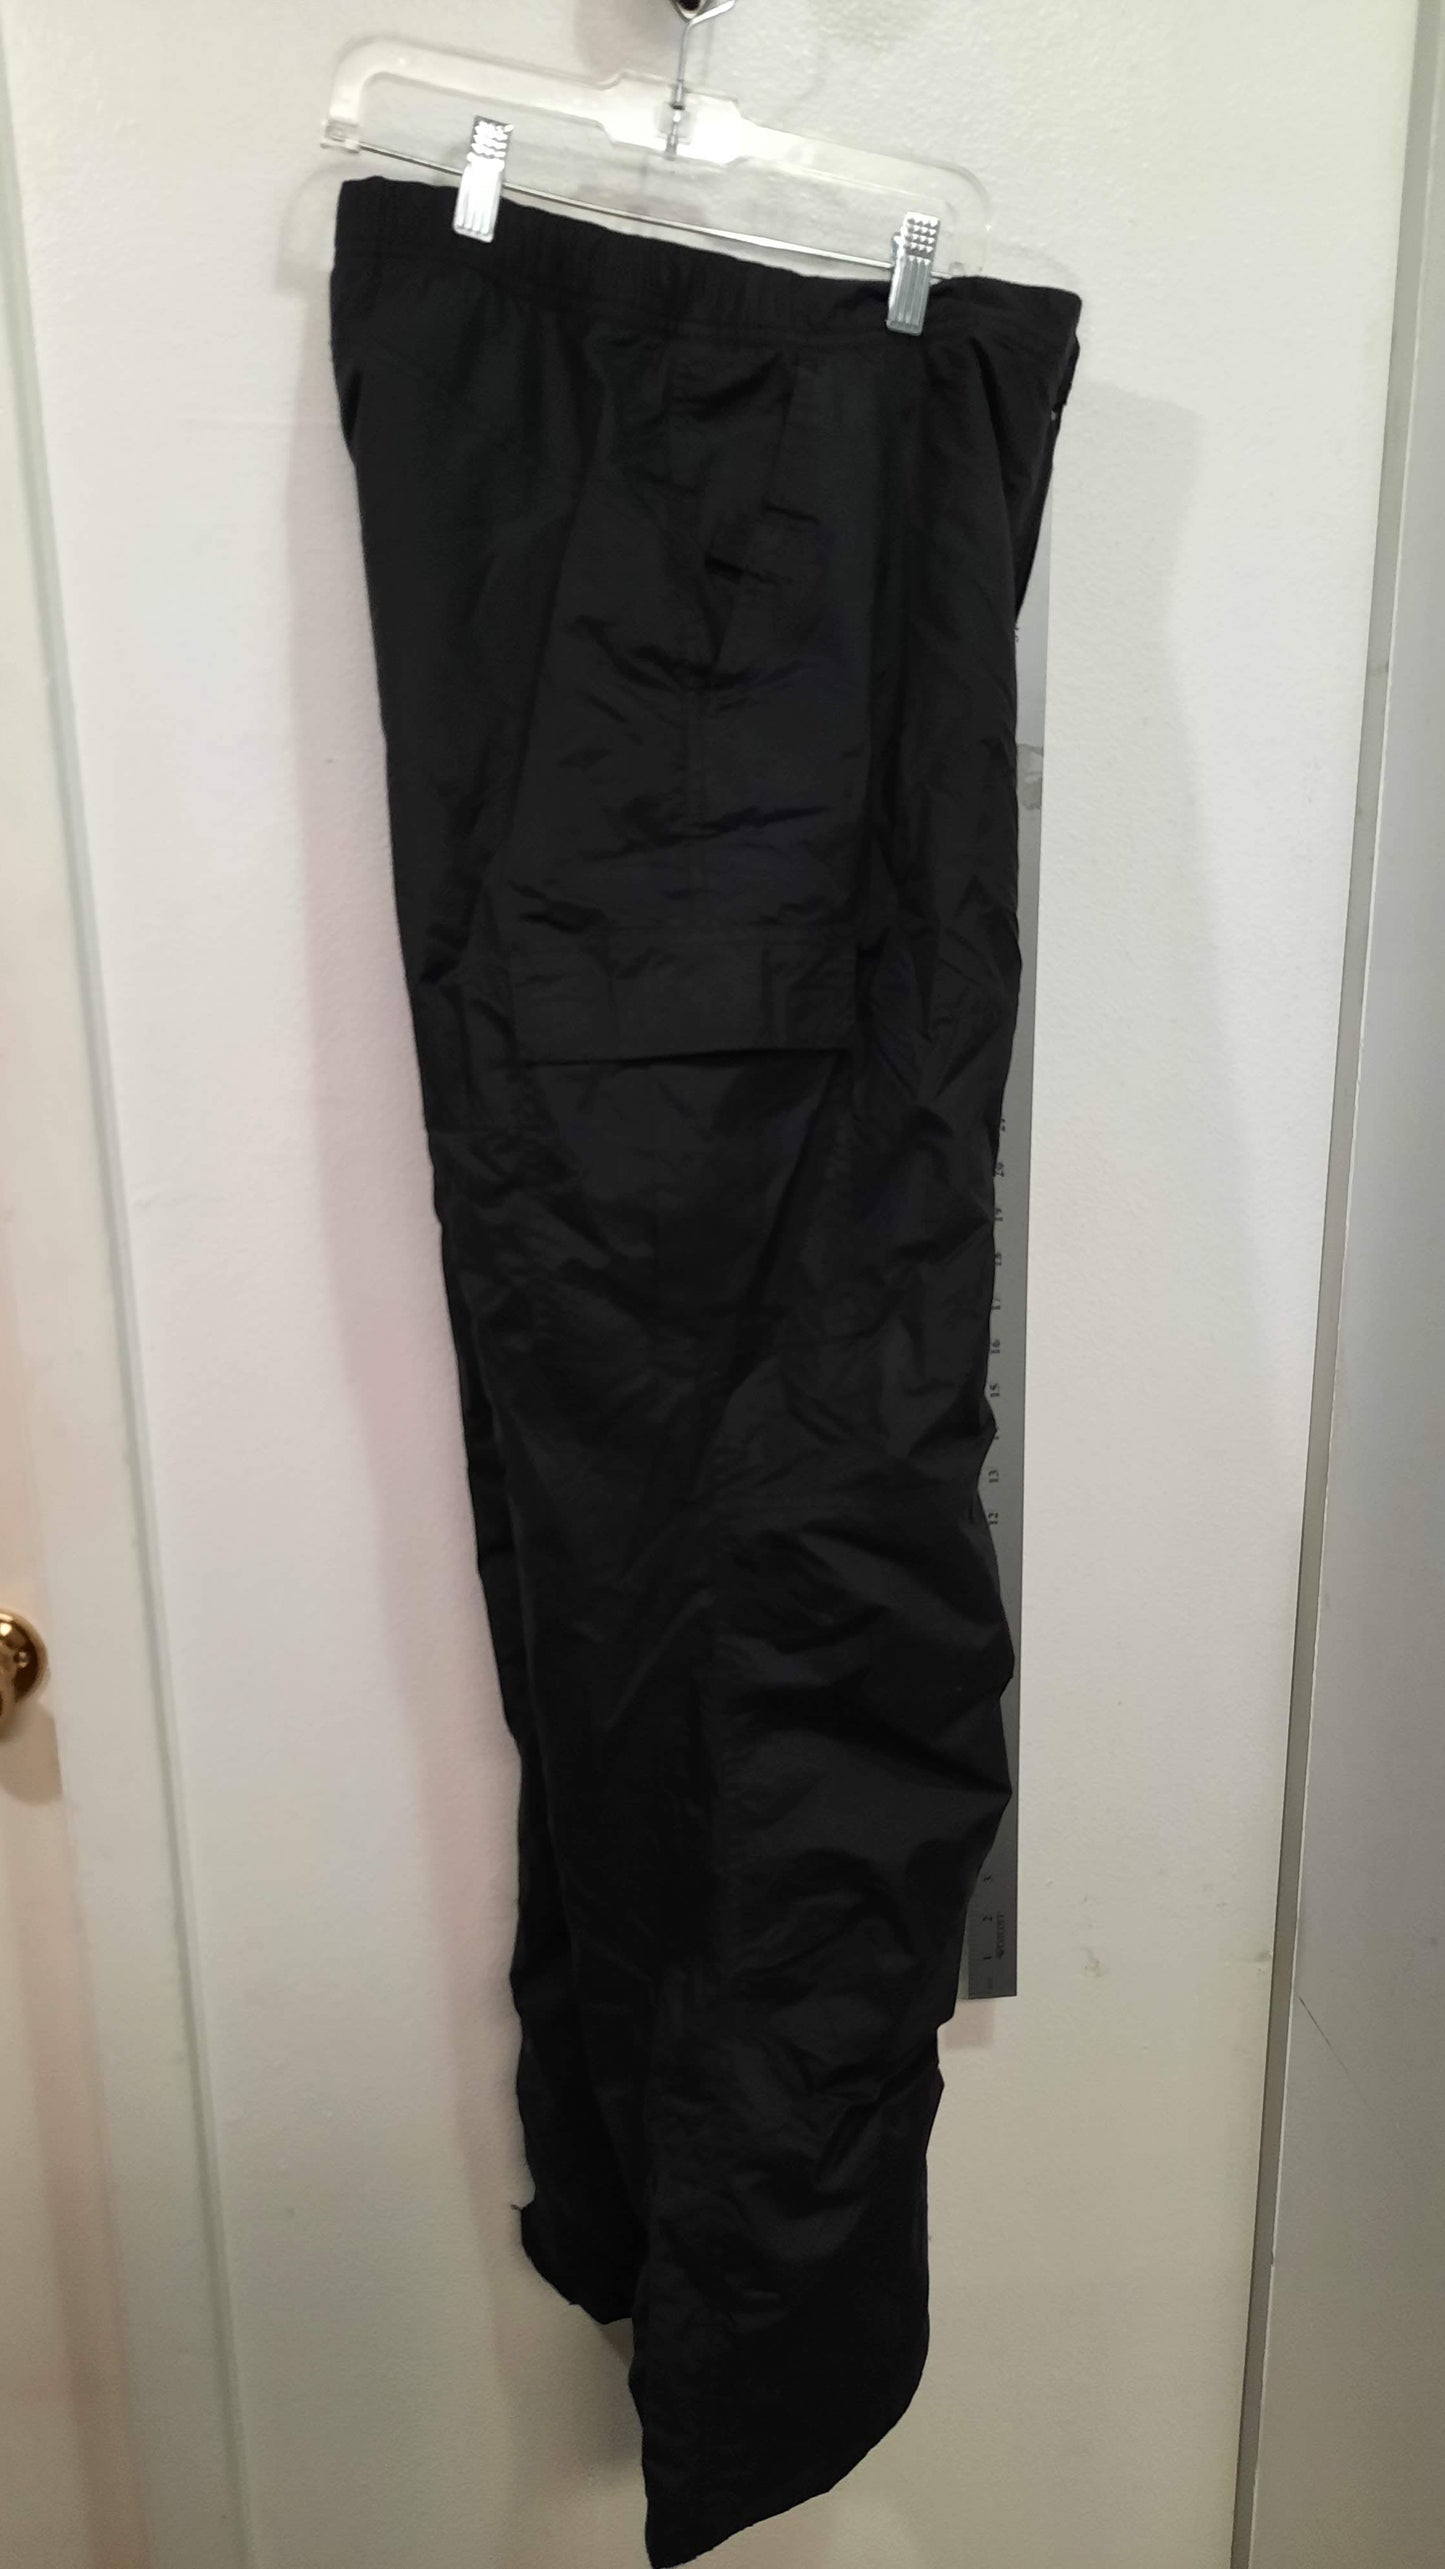 Rawik Ski/Board Pants Size Medium Black Used